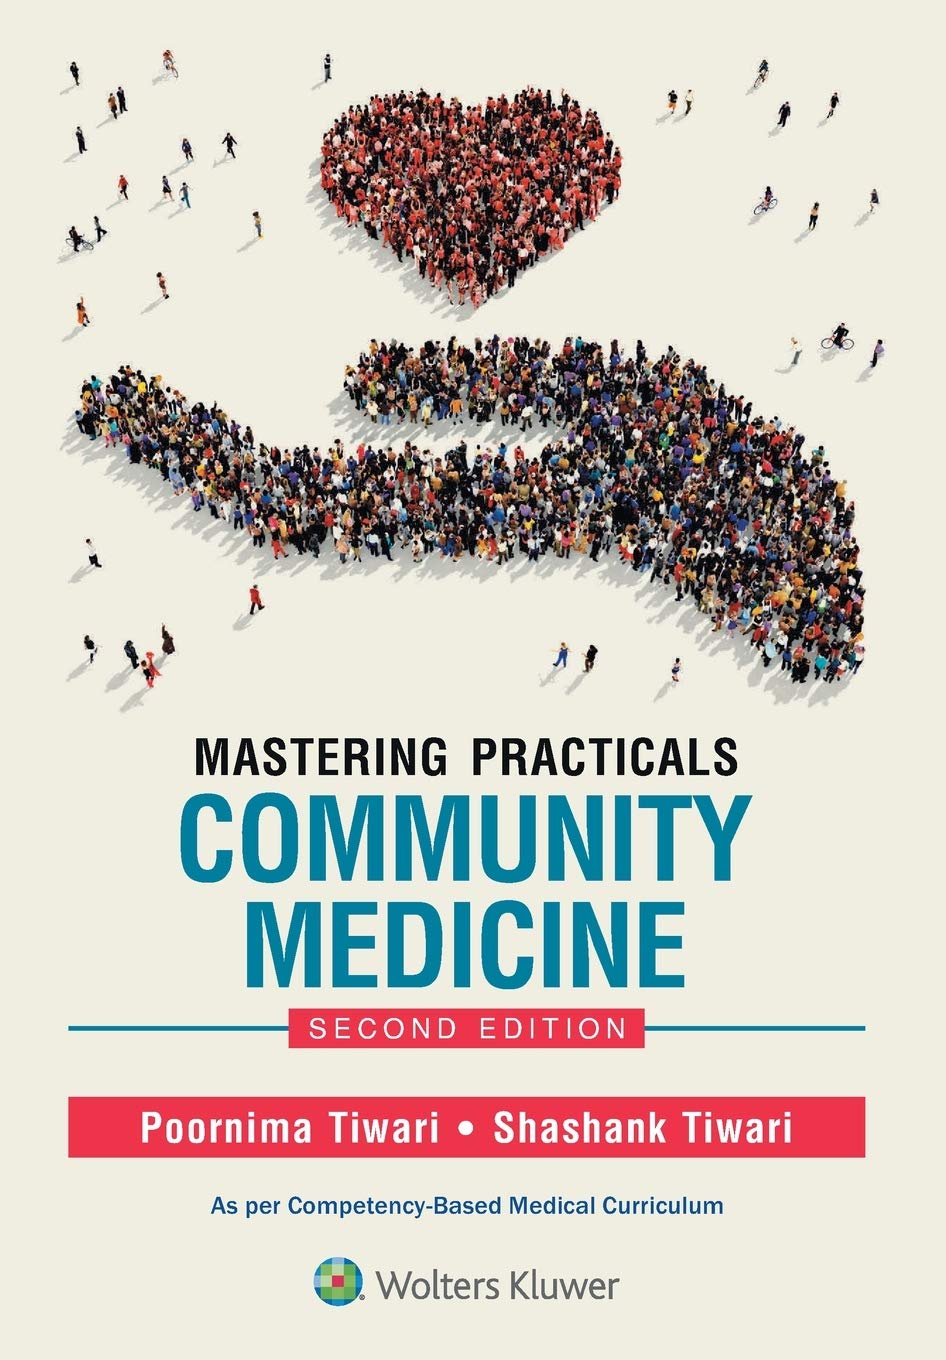 pubmed thesis topics in community medicine